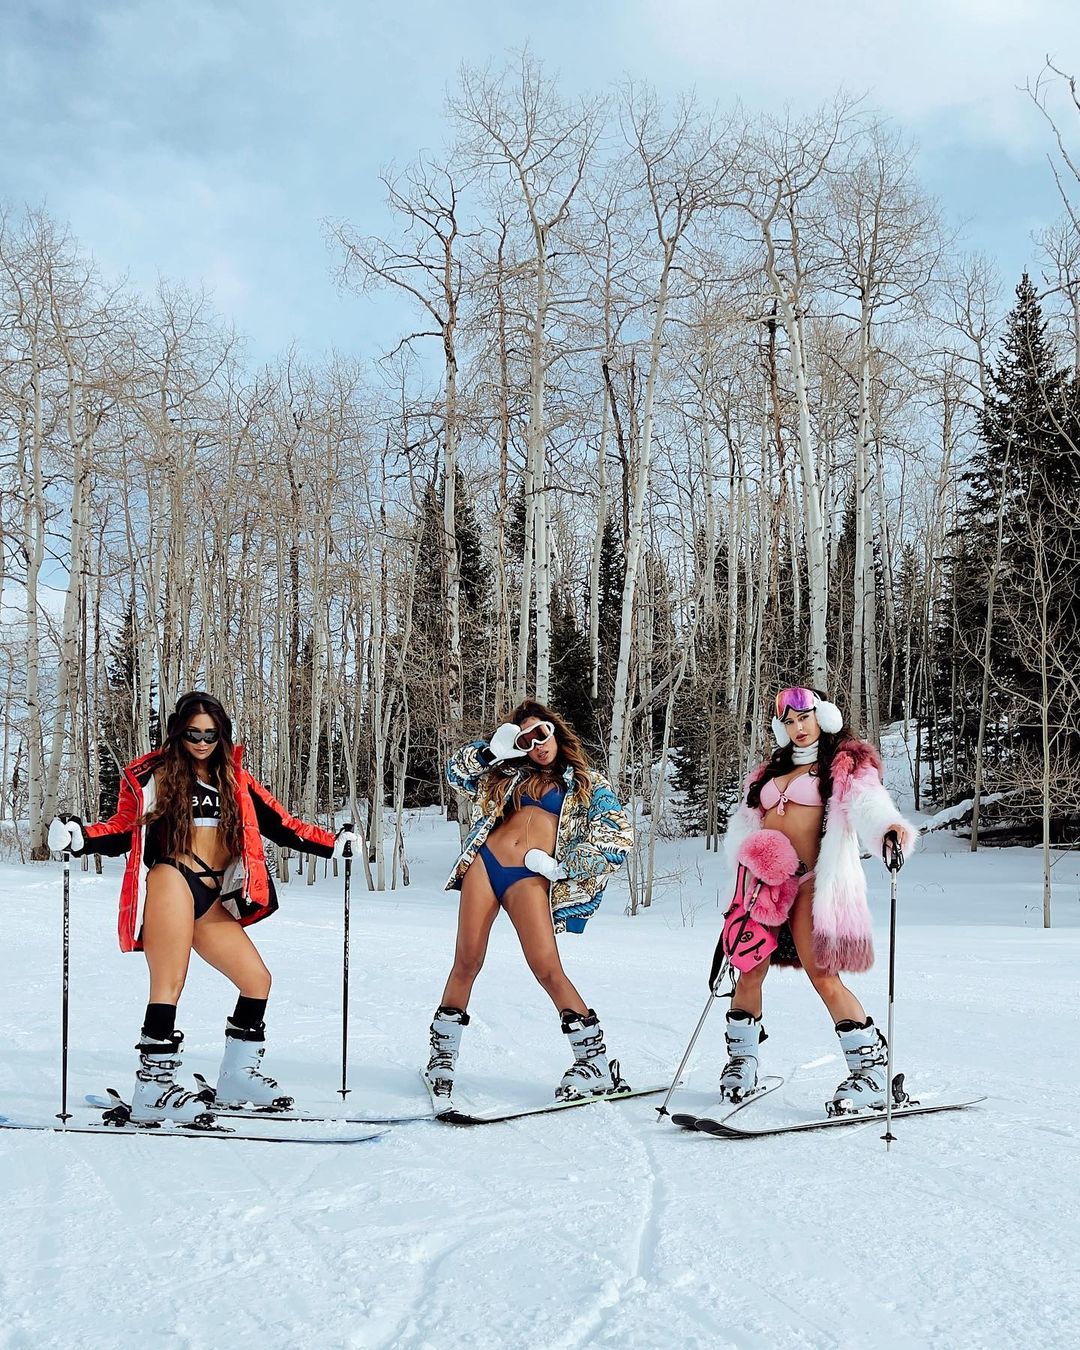 Babes in Bikinis Braving the Snow! - Photo 12